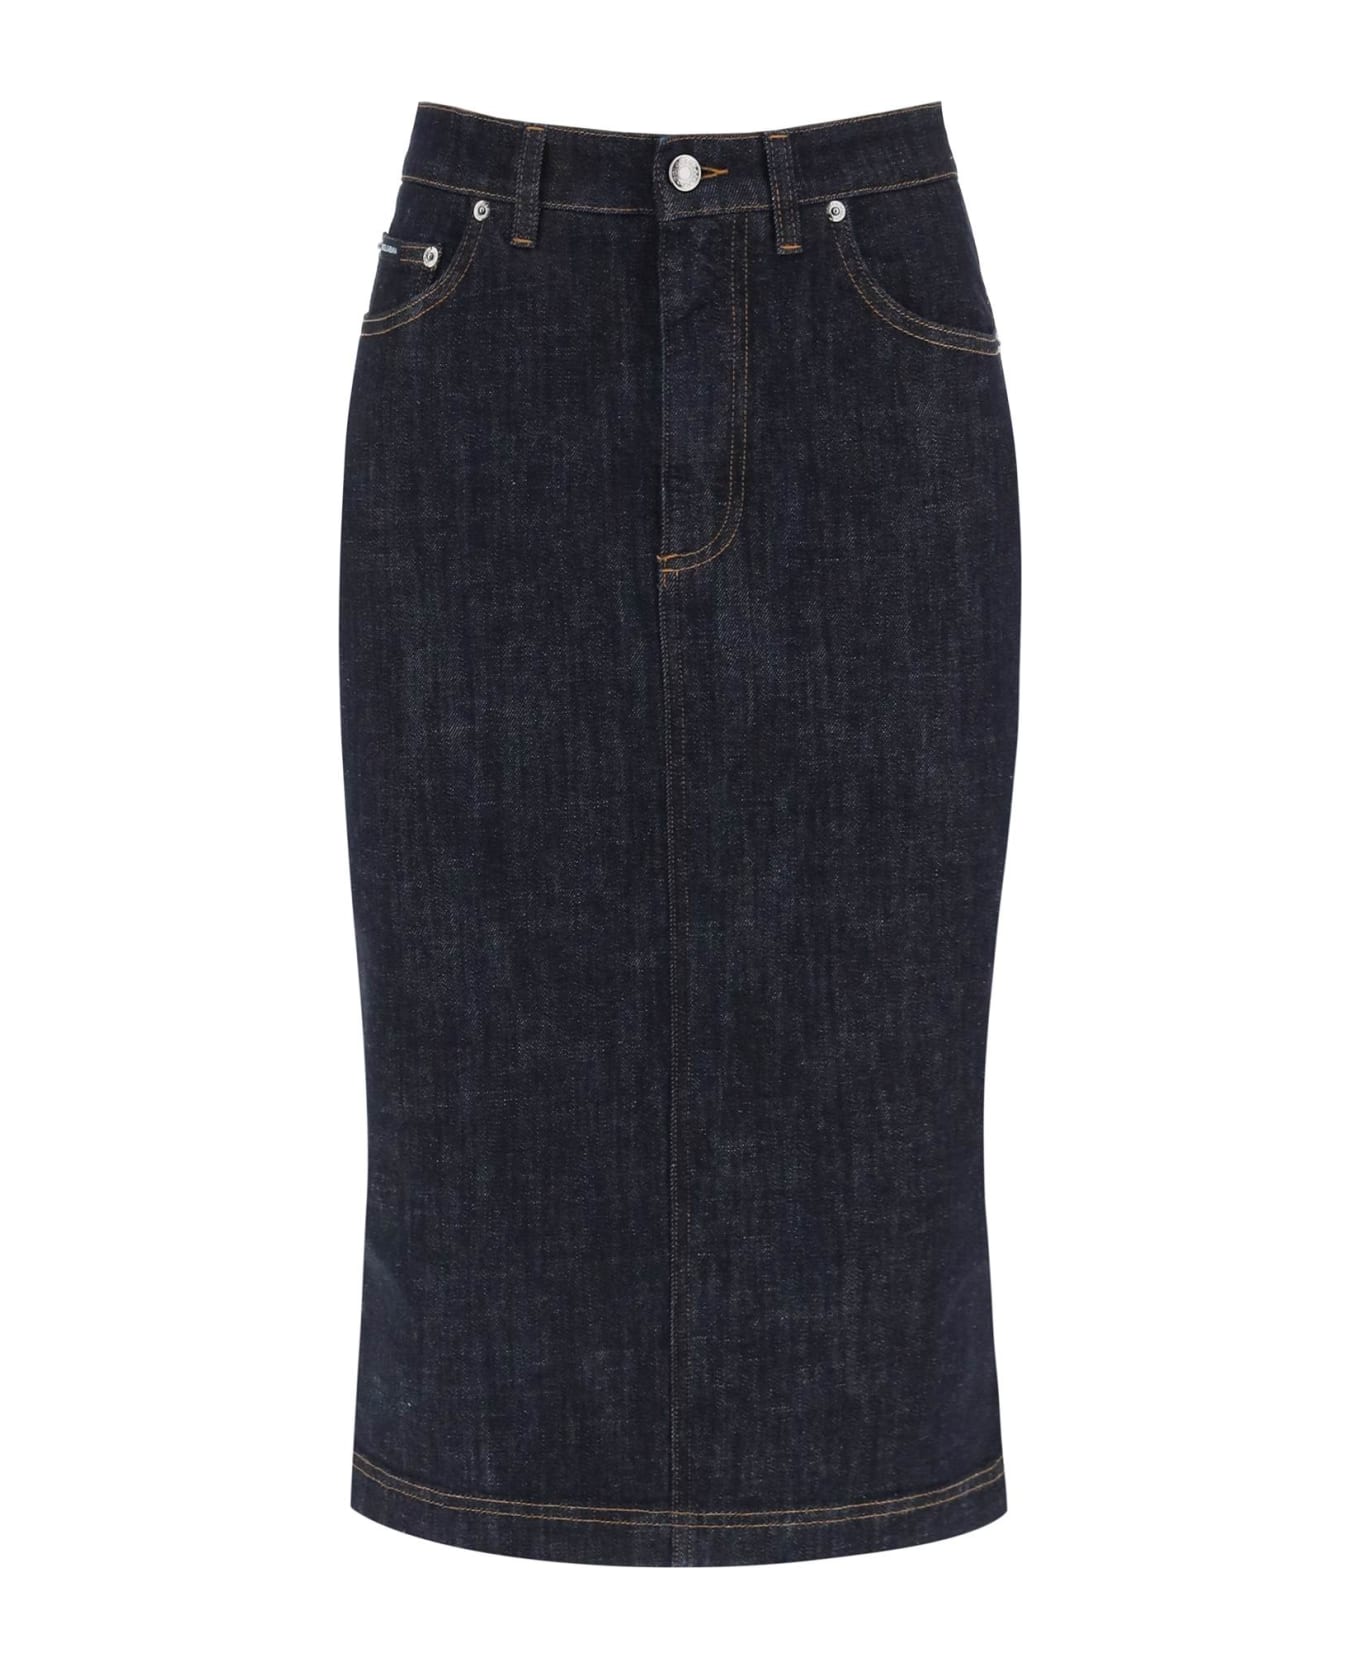 Dolce & Gabbana Denim Pencil Skirt - VARIANTE ABBINATA (Blue) スカート